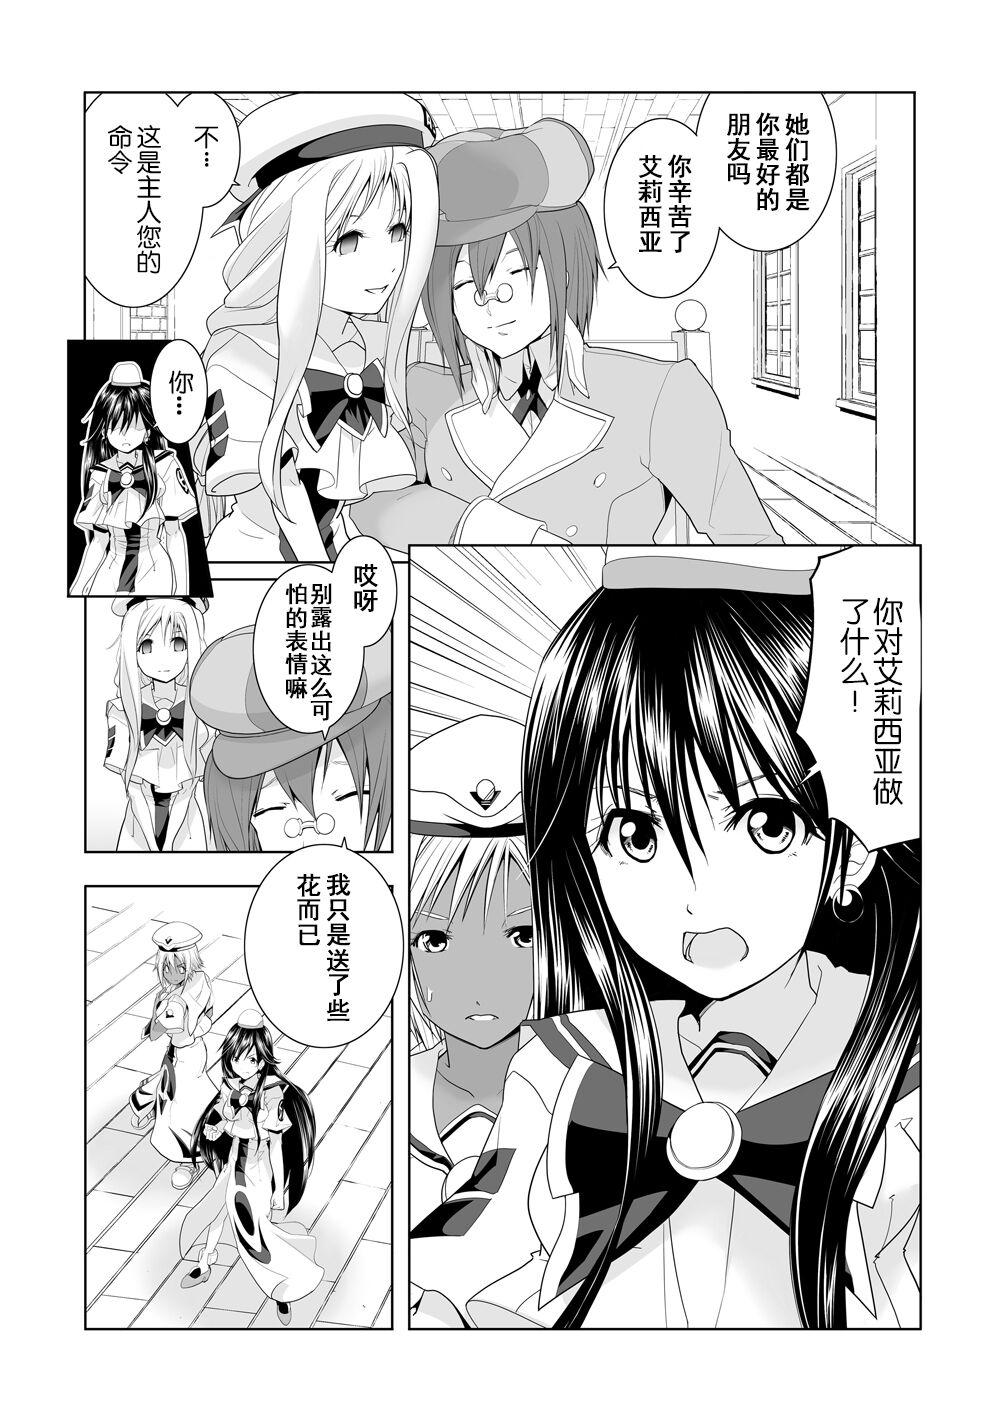 Weird AR*A Mind-control Manga - Aria Amigos - Page 7